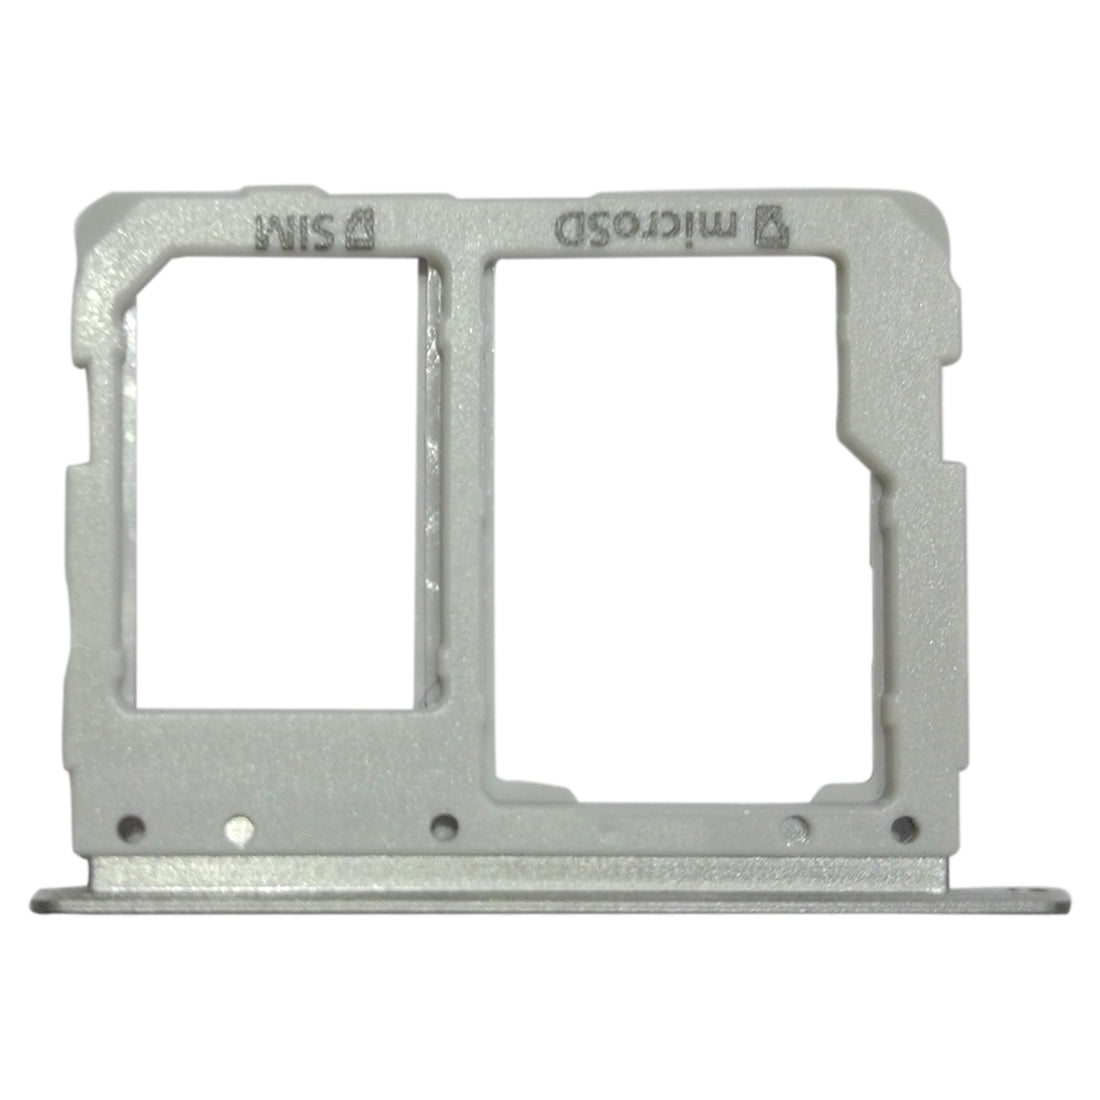 SIM / Micro SD Tray for Samsung Galaxy Tab S3 9.7 / T825 3G Silver